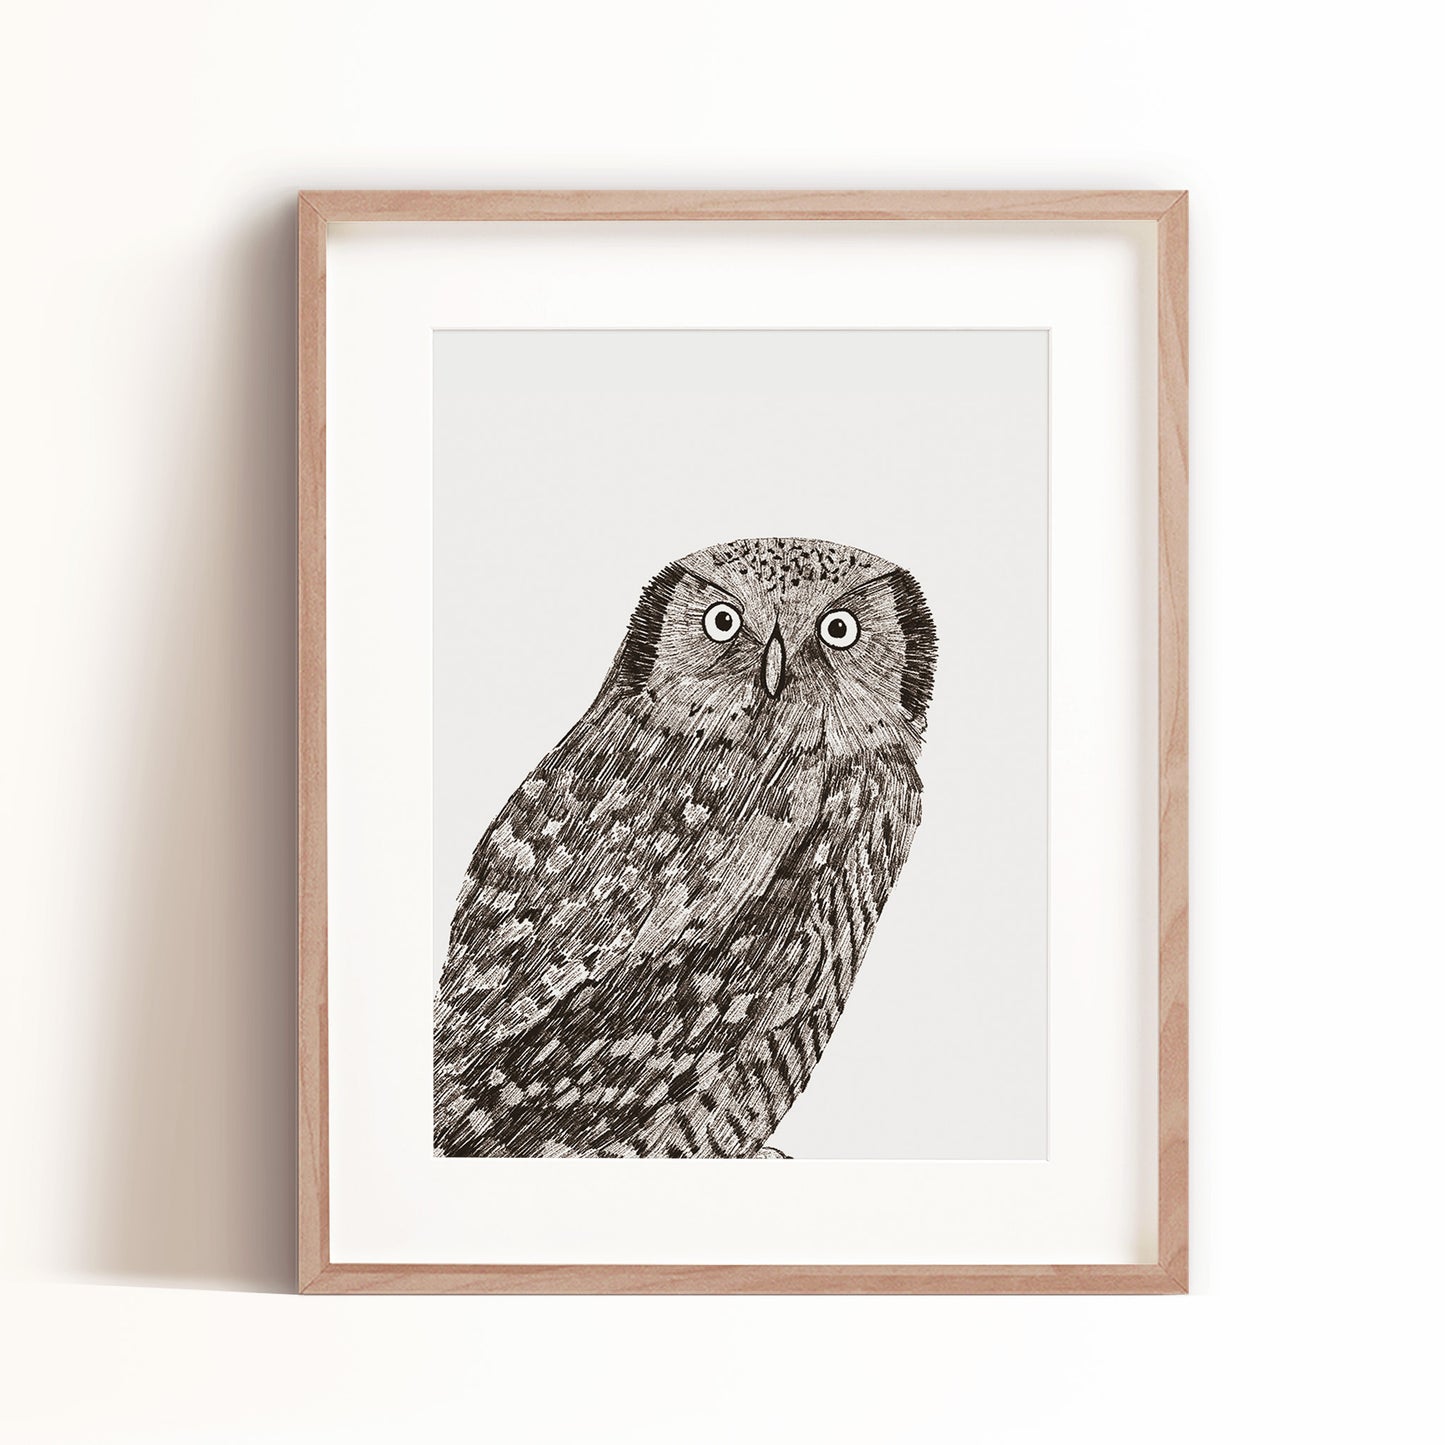 Framed image of a sketched woodland owl art print by Cayla Naylor